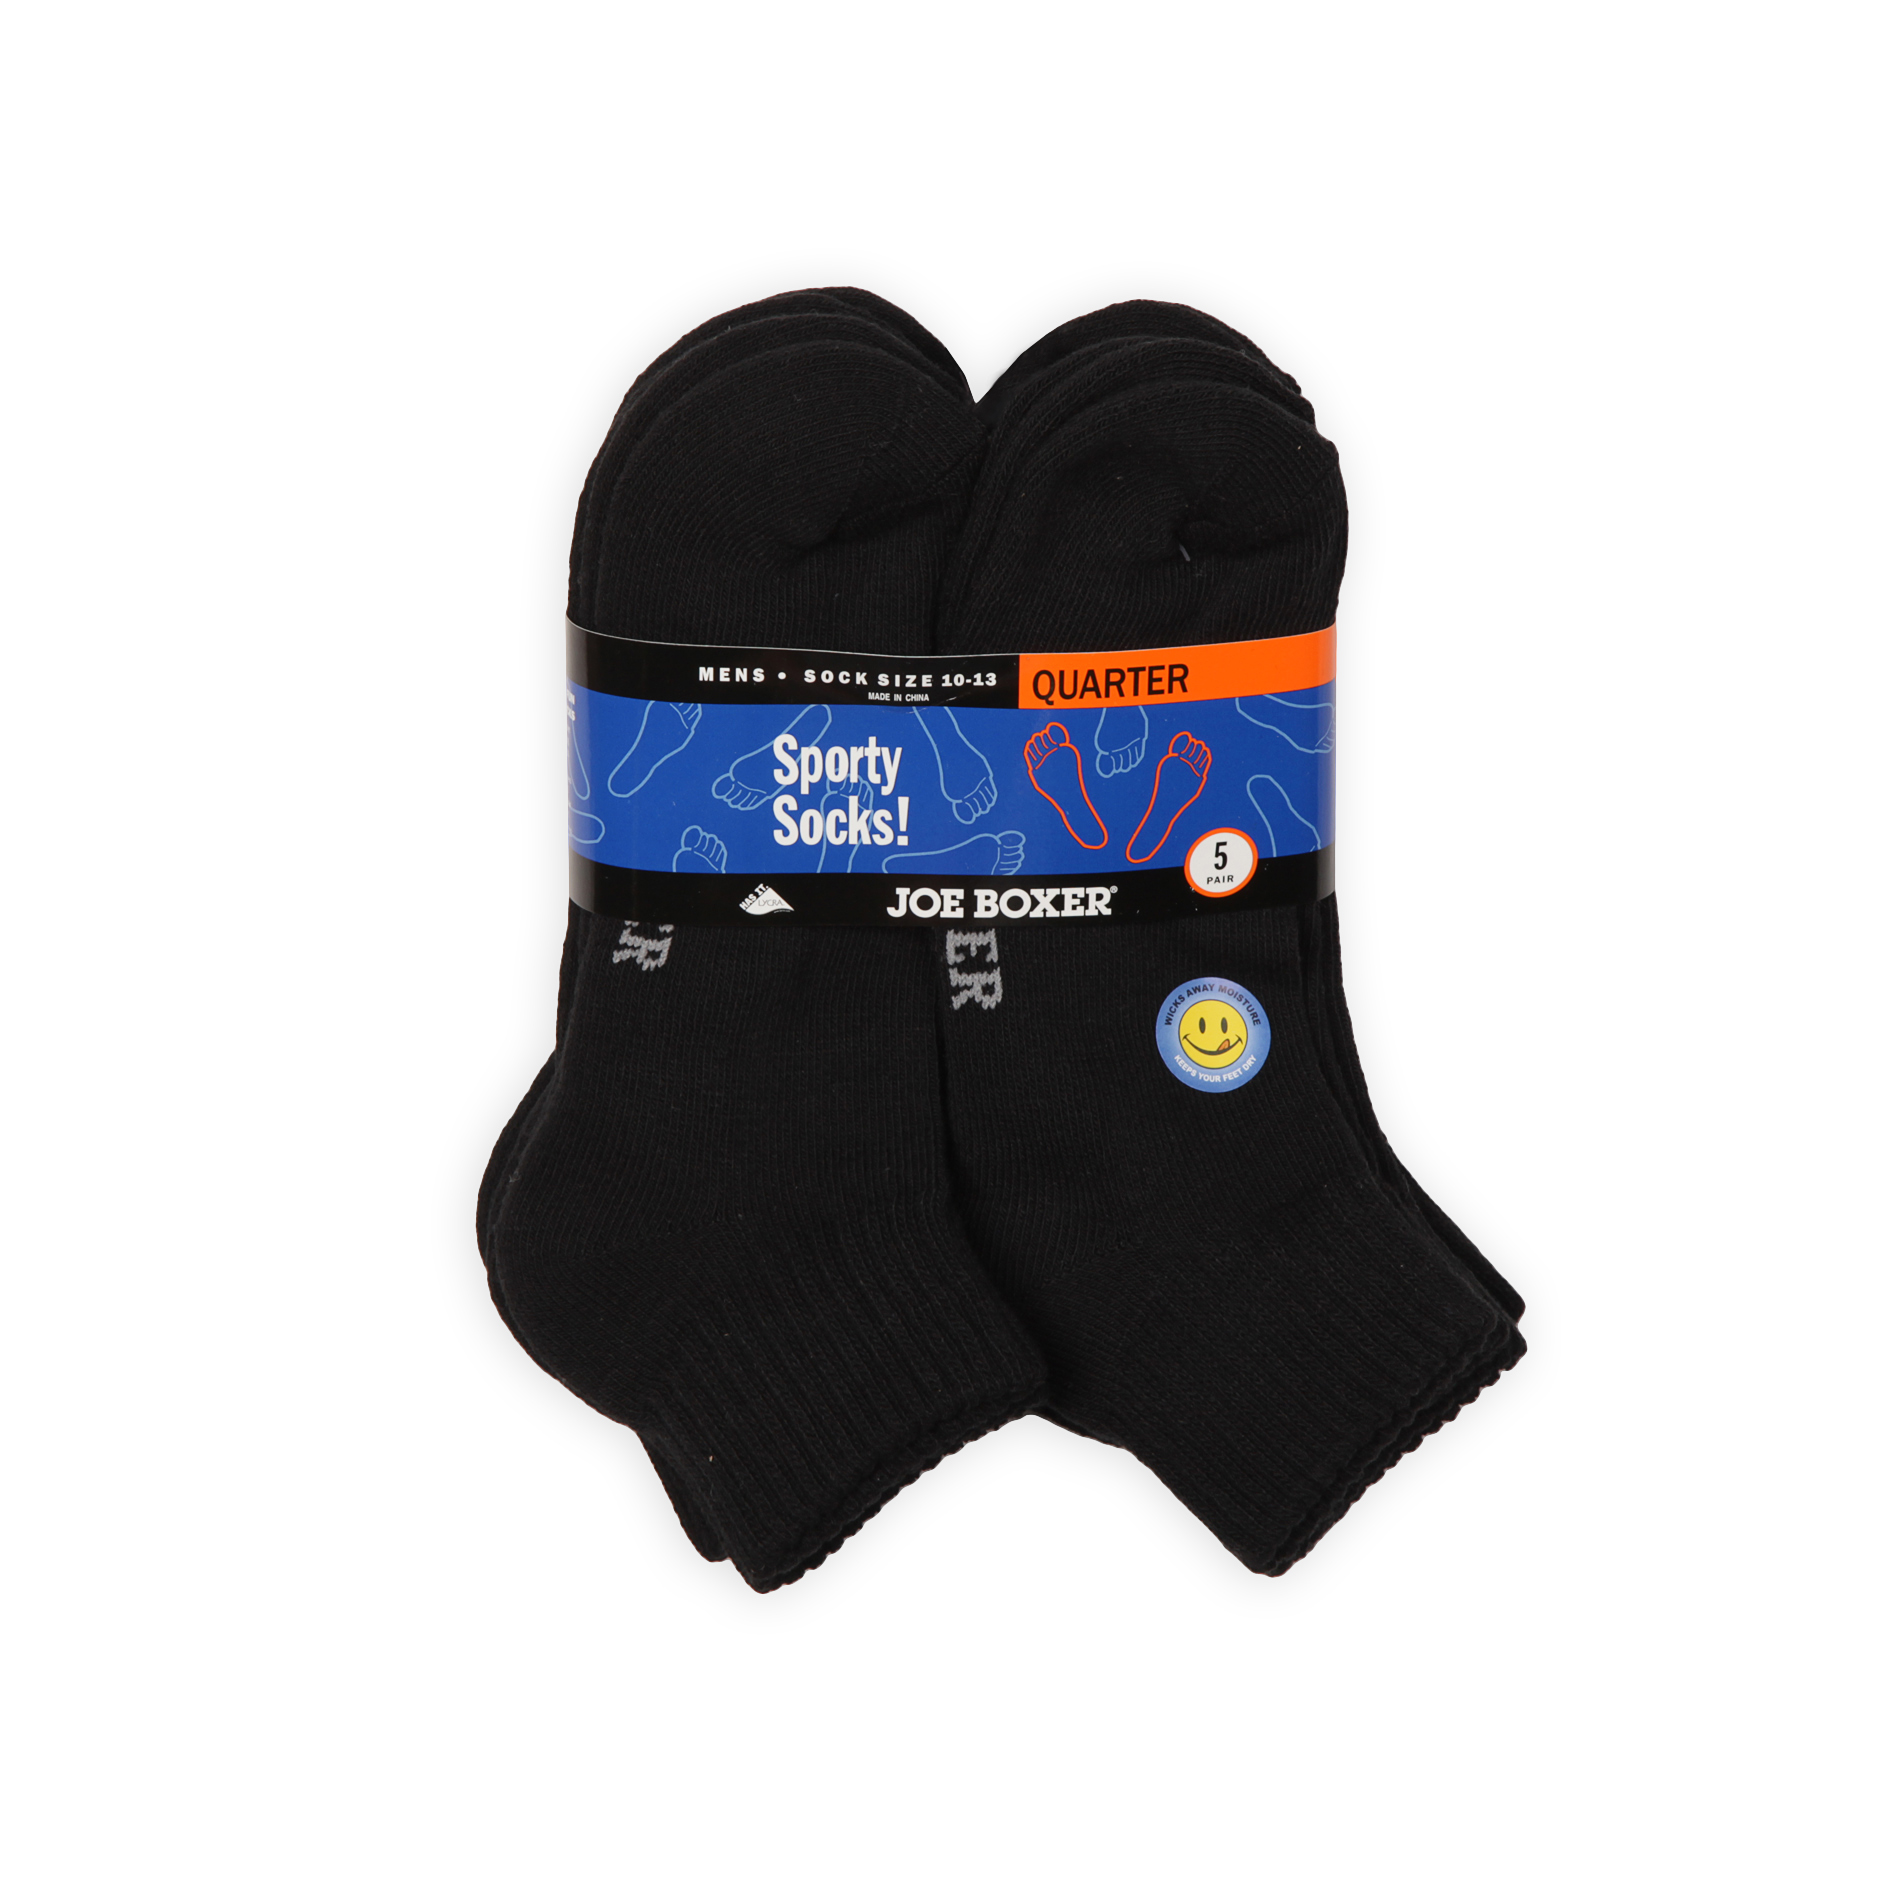 Joe Boxer Men's 5 Pack Quarter Socks - Black - Size 10-13